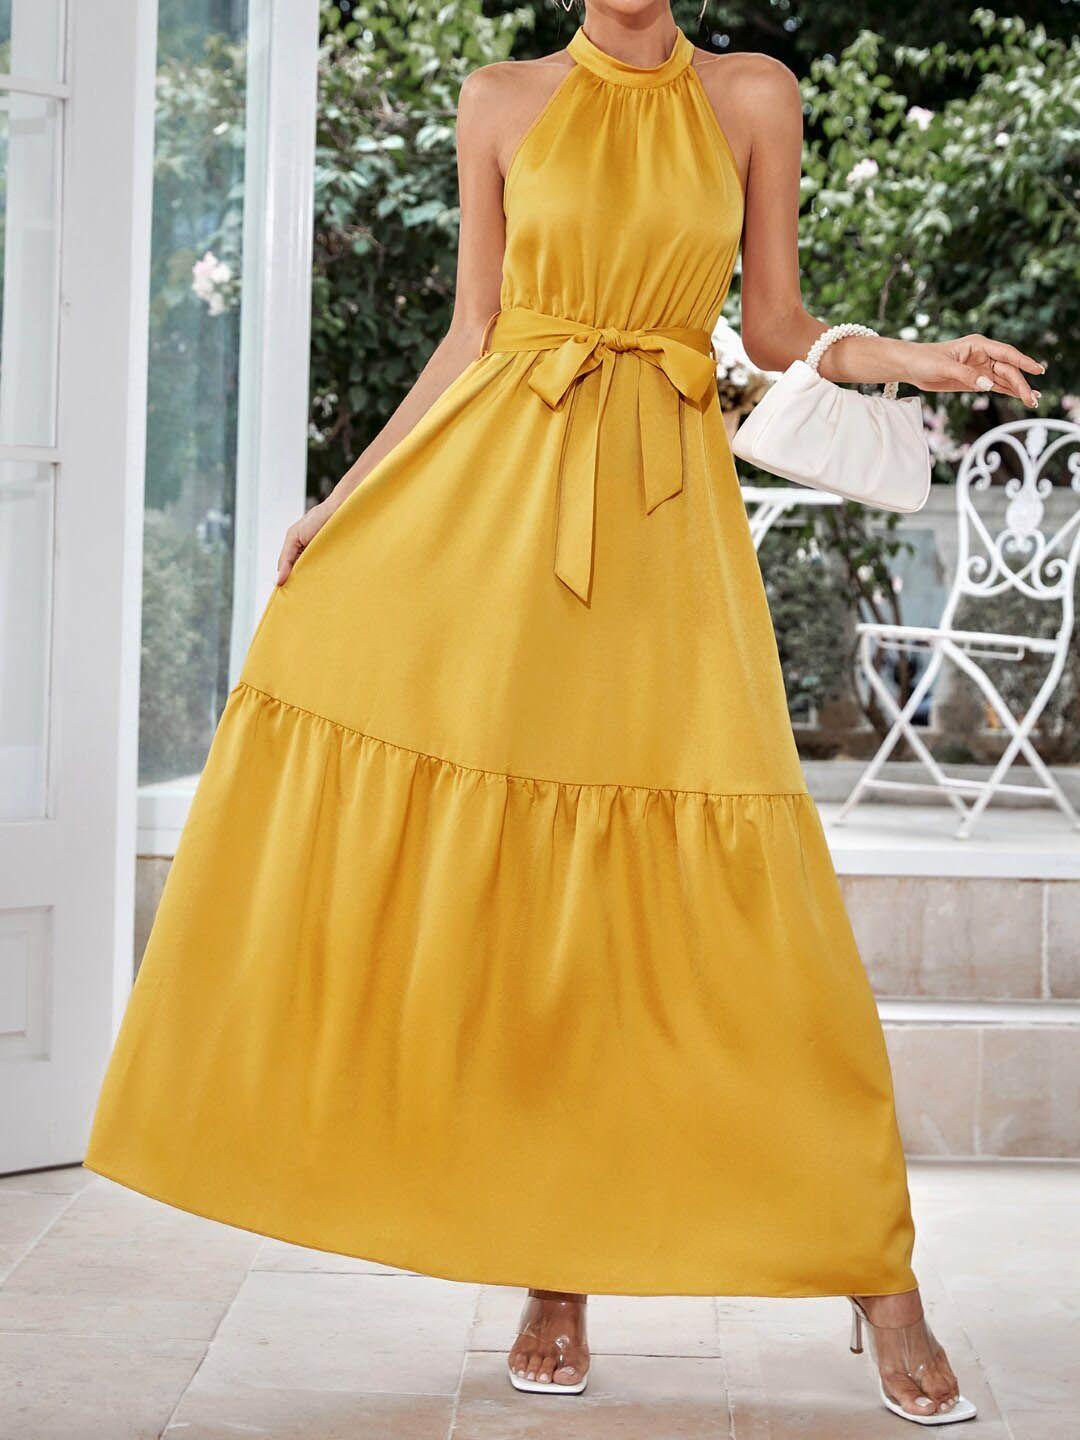 stylecast yellow halter neck maxi dress